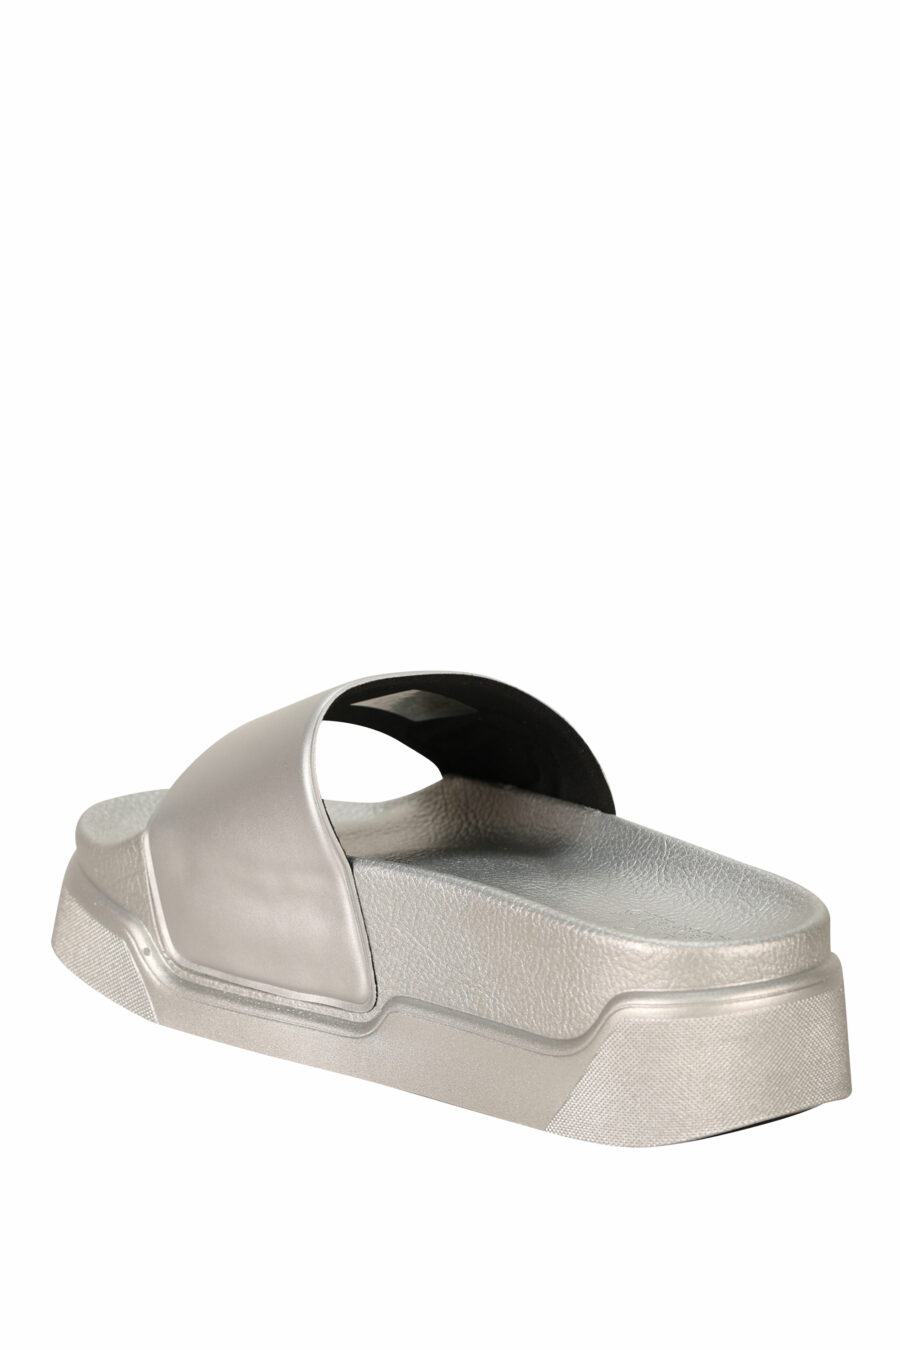 Silver platform sandals with "karl" logo - 5059529404849 3